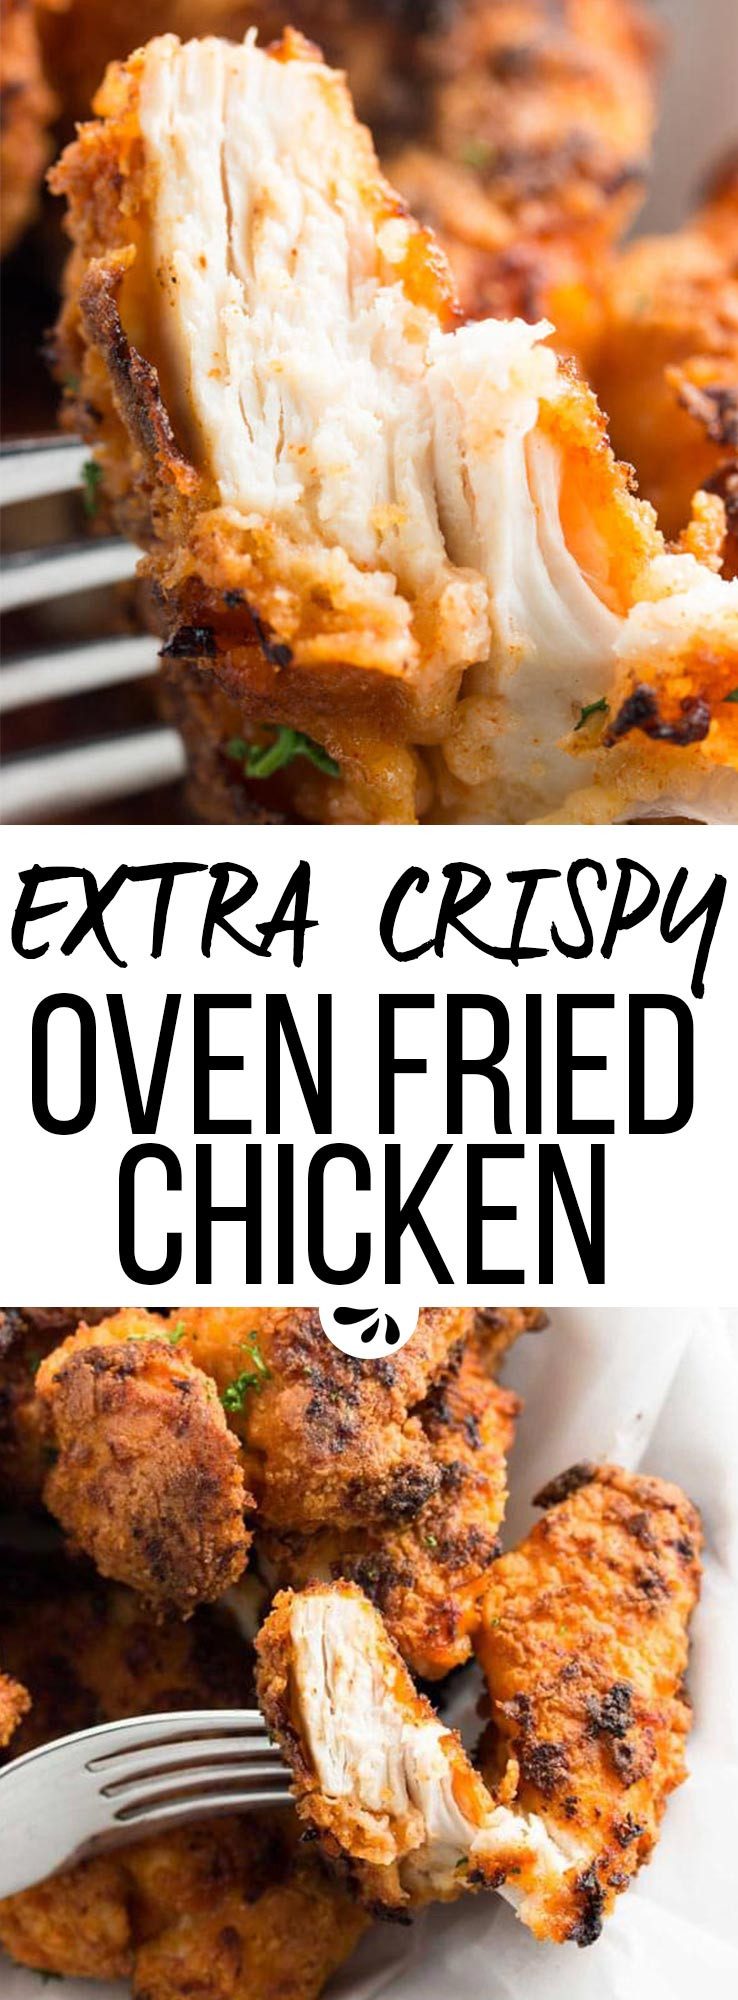 Healthy Oven Fried Chicken
 Crispy Oven Fried Chicken Recipe